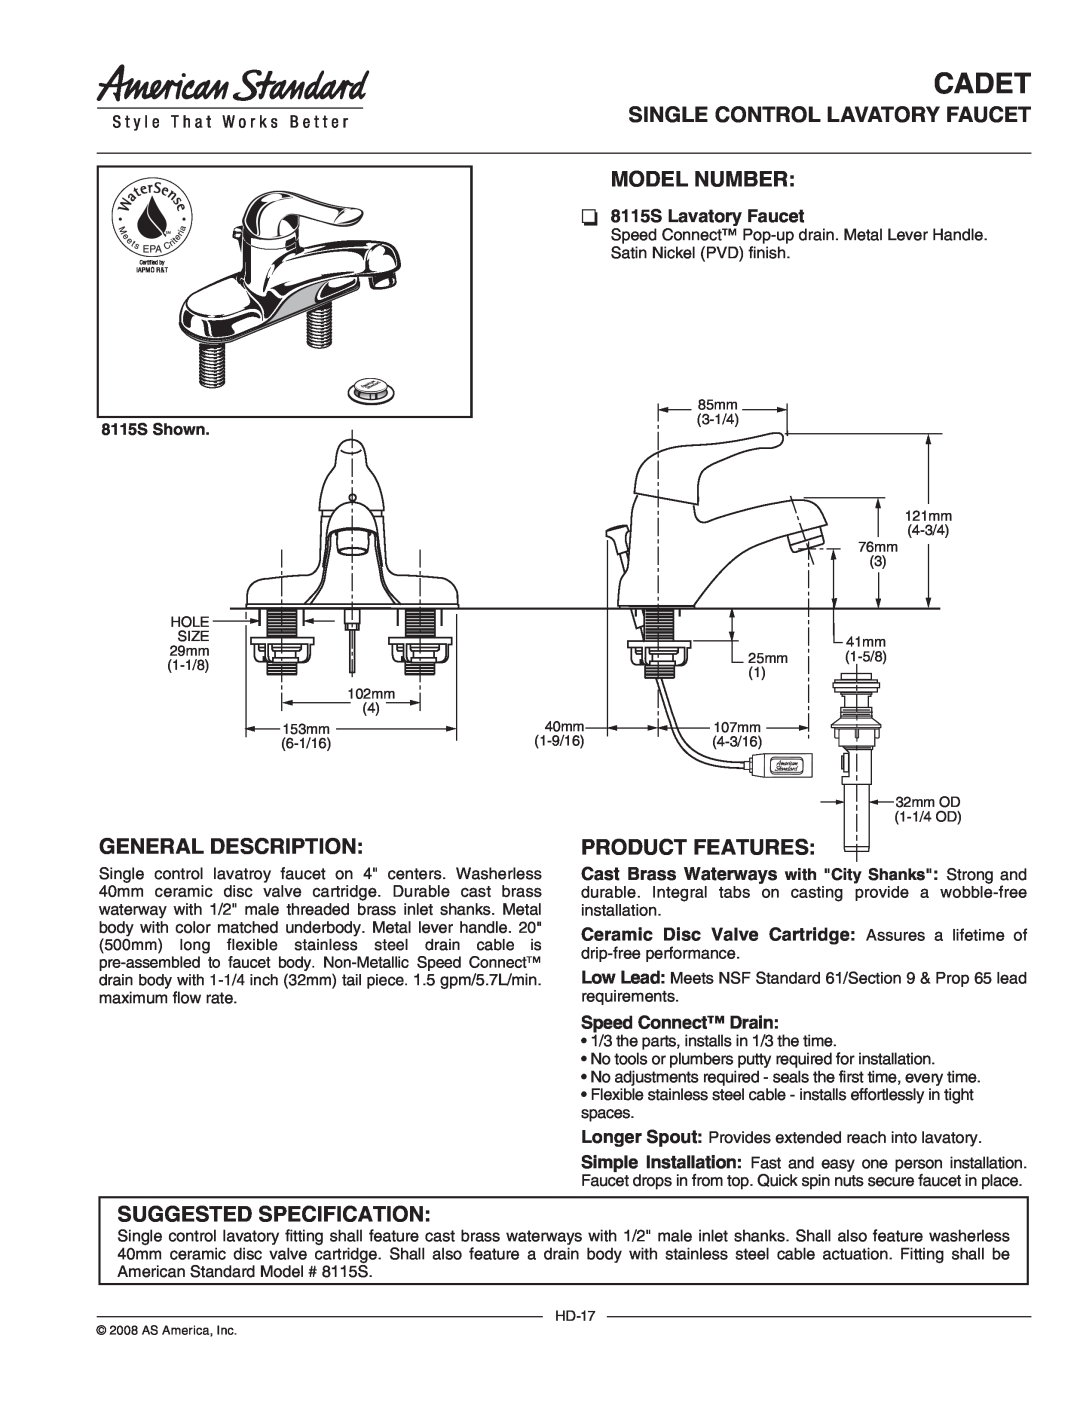 American Standard 8115S specifications Cadet, Single Control Lavatory Faucet Model Number, General Description 